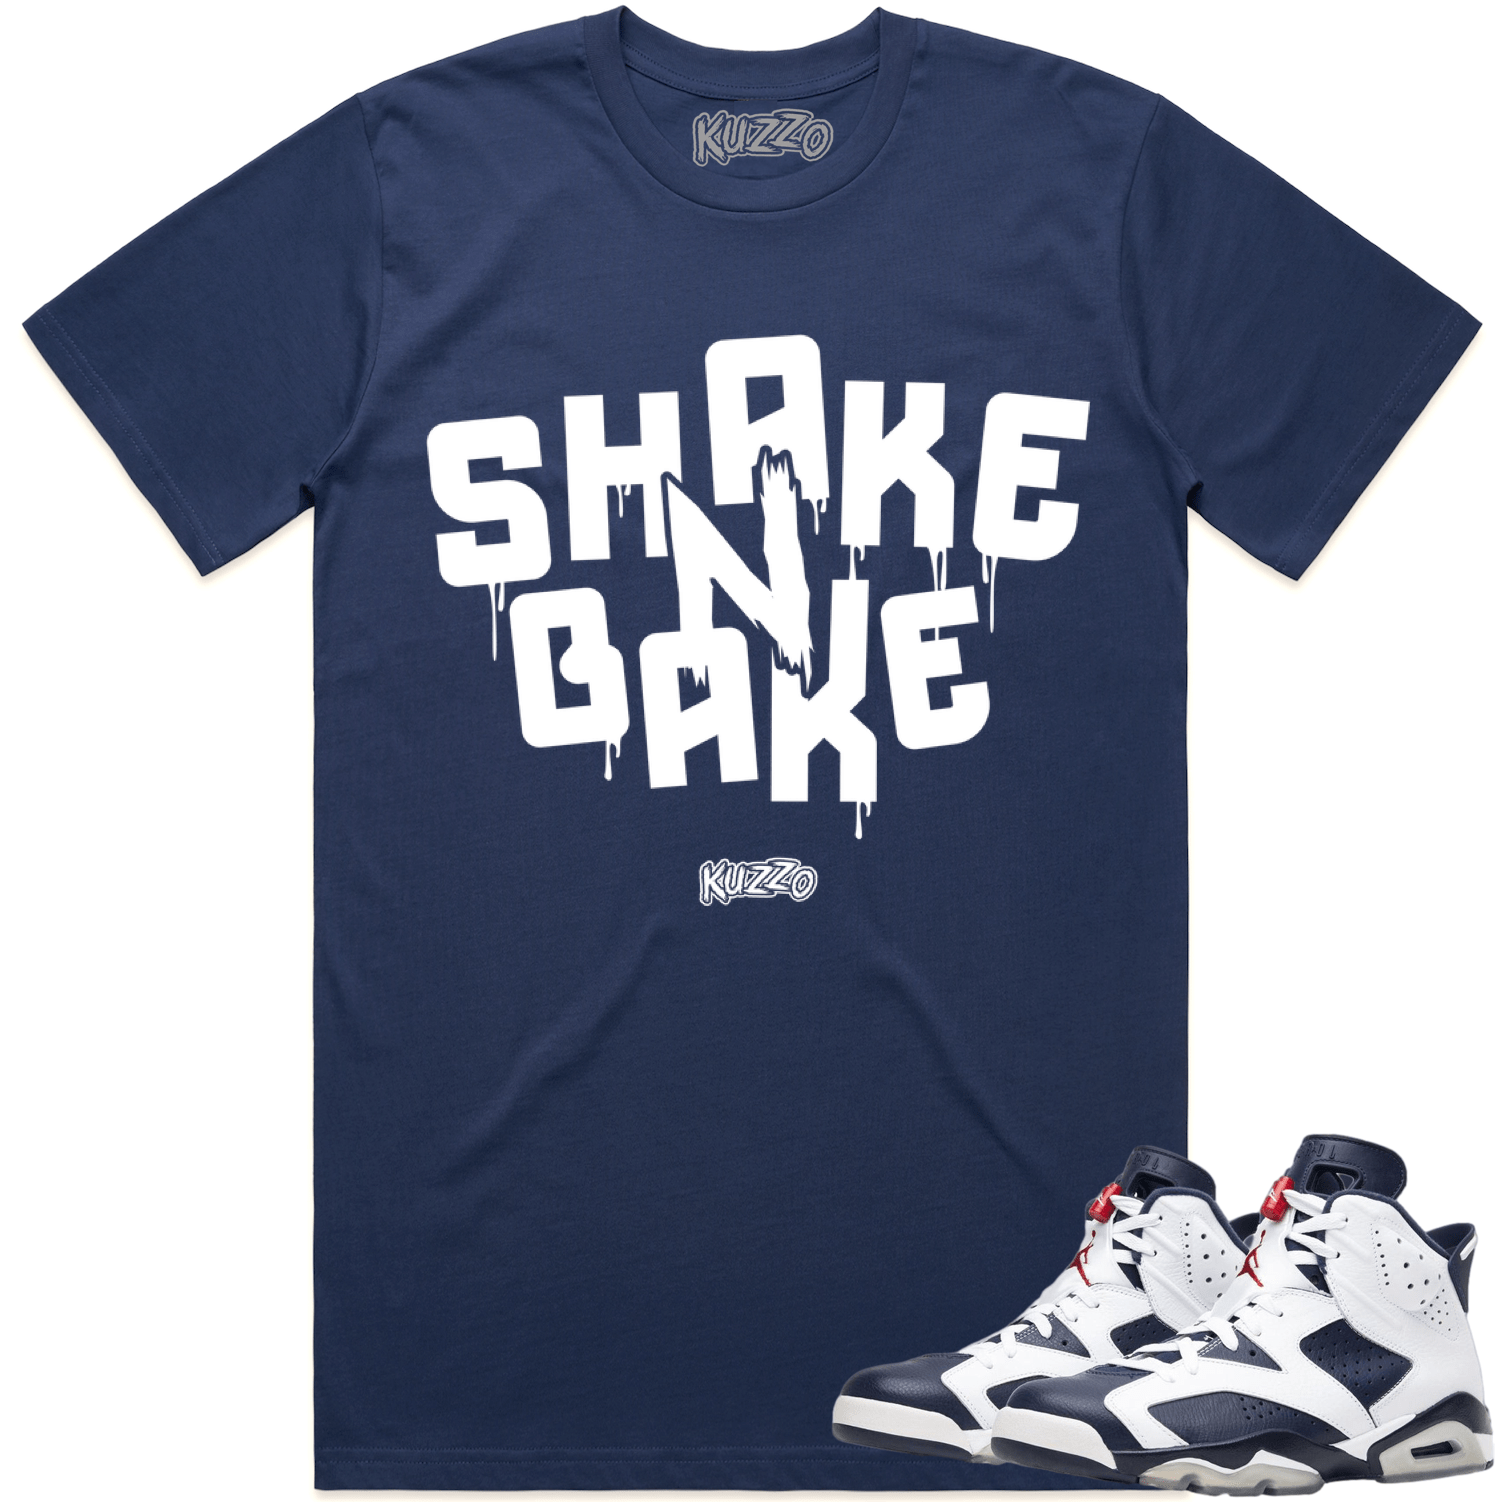 Olympic 6s Shirts - Jordan Retro 6 Olympic 6s Sneaker Tees - Shake